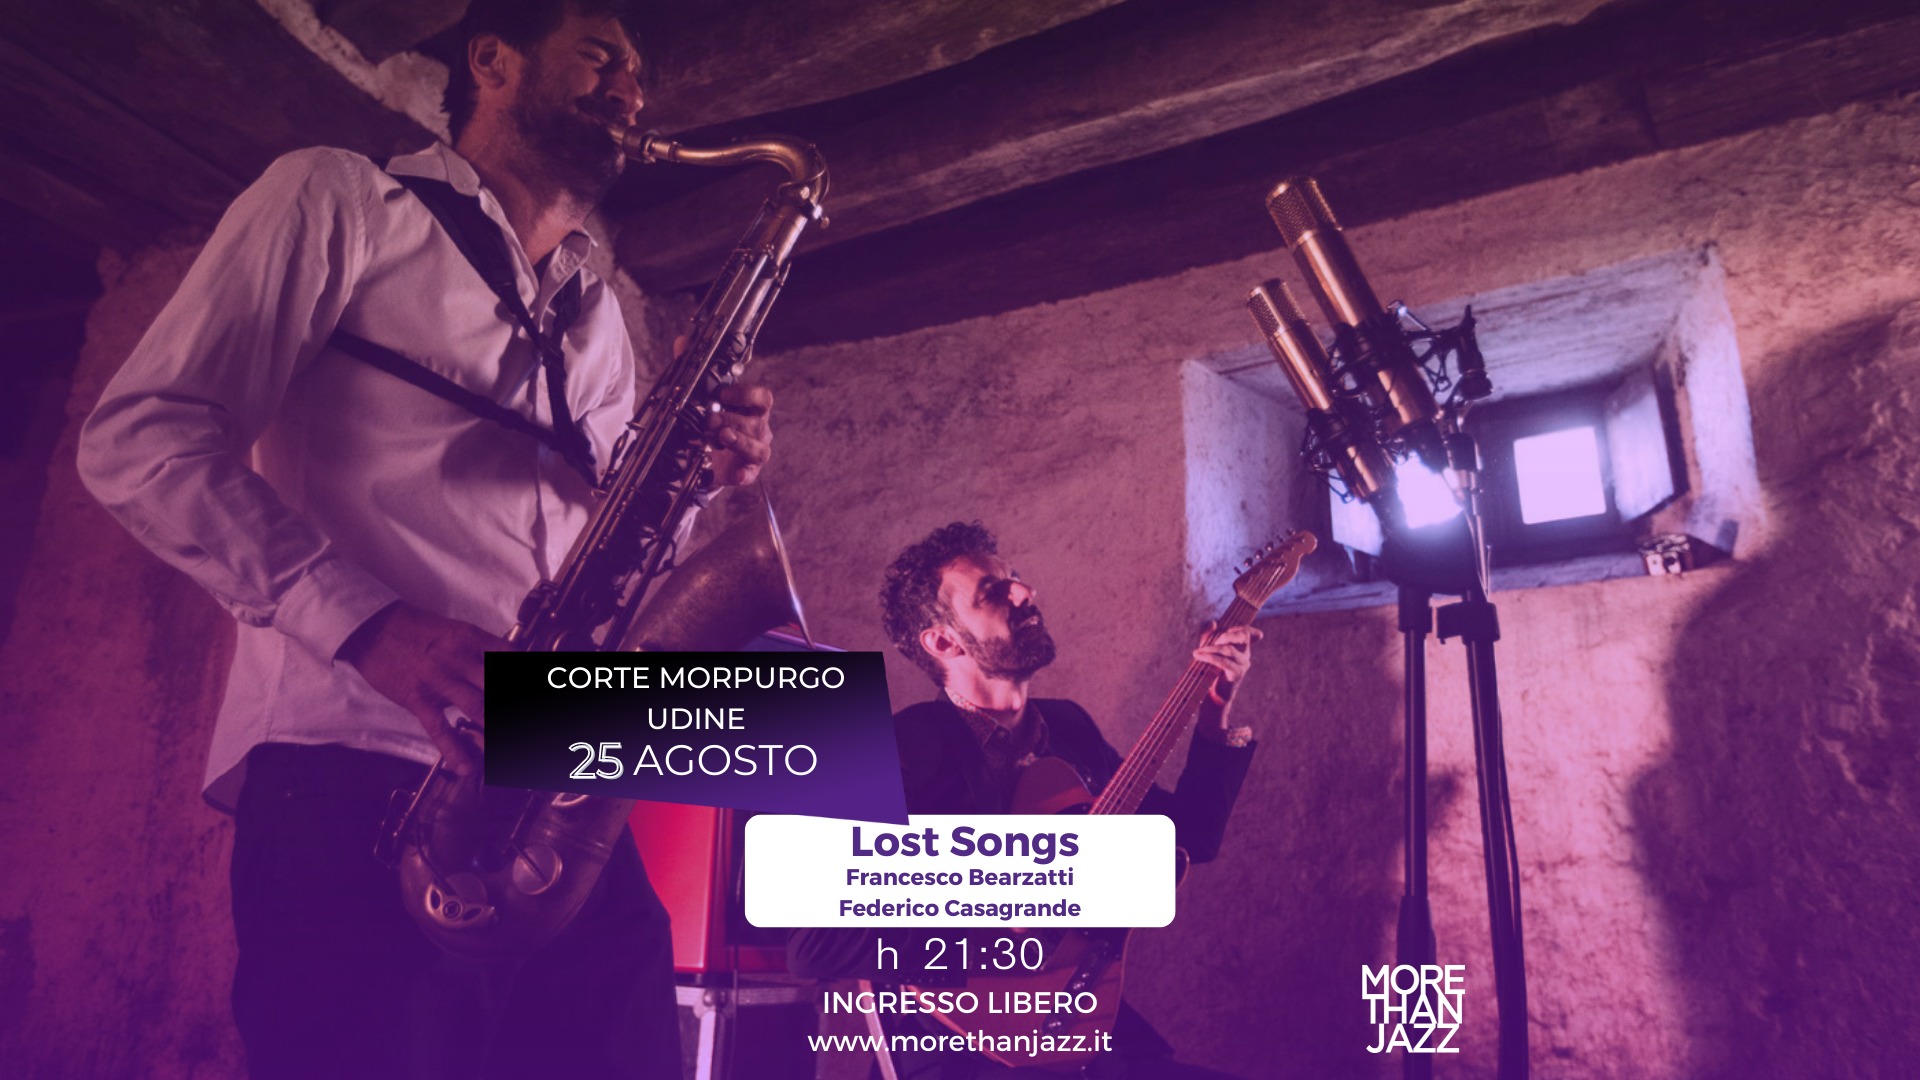 Lost Songs, Francesco Bearzatti e Federico Casagrande , More Than Jazz 2022,Udine